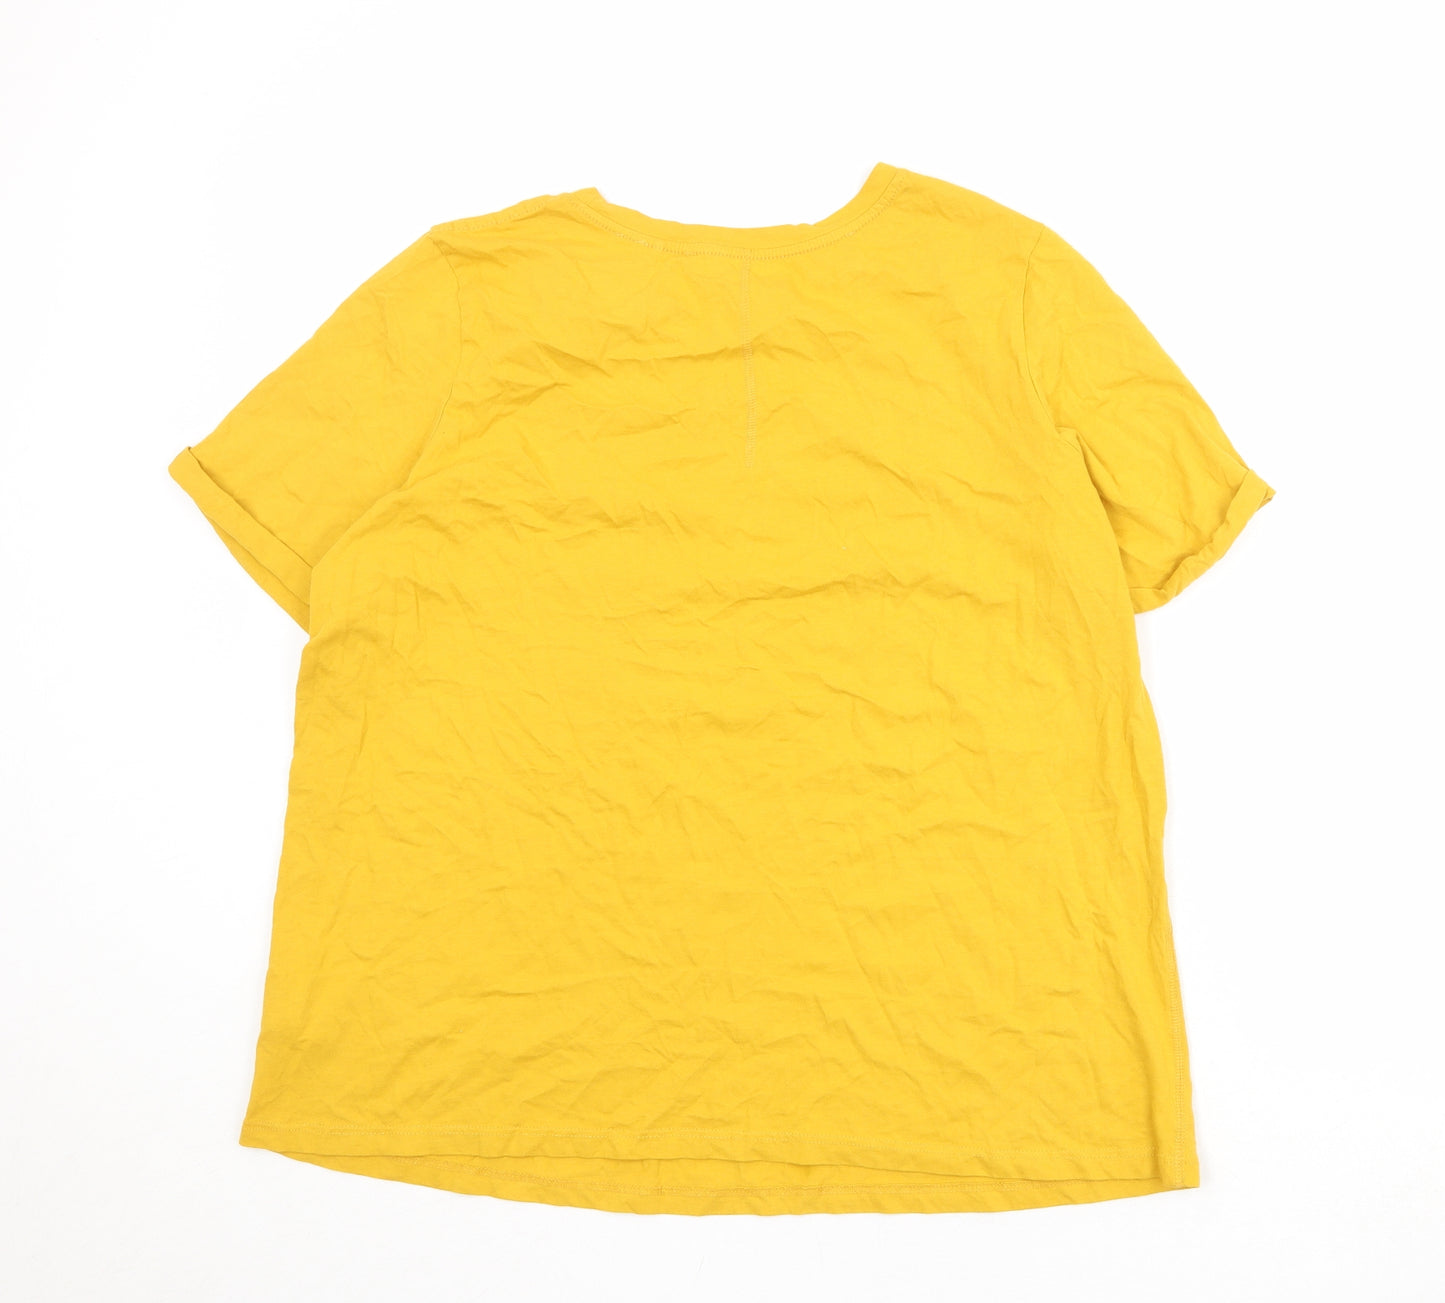 NEXT Womens Orange 100% Cotton Basic T-Shirt Size 18 Round Neck - Palm Tree